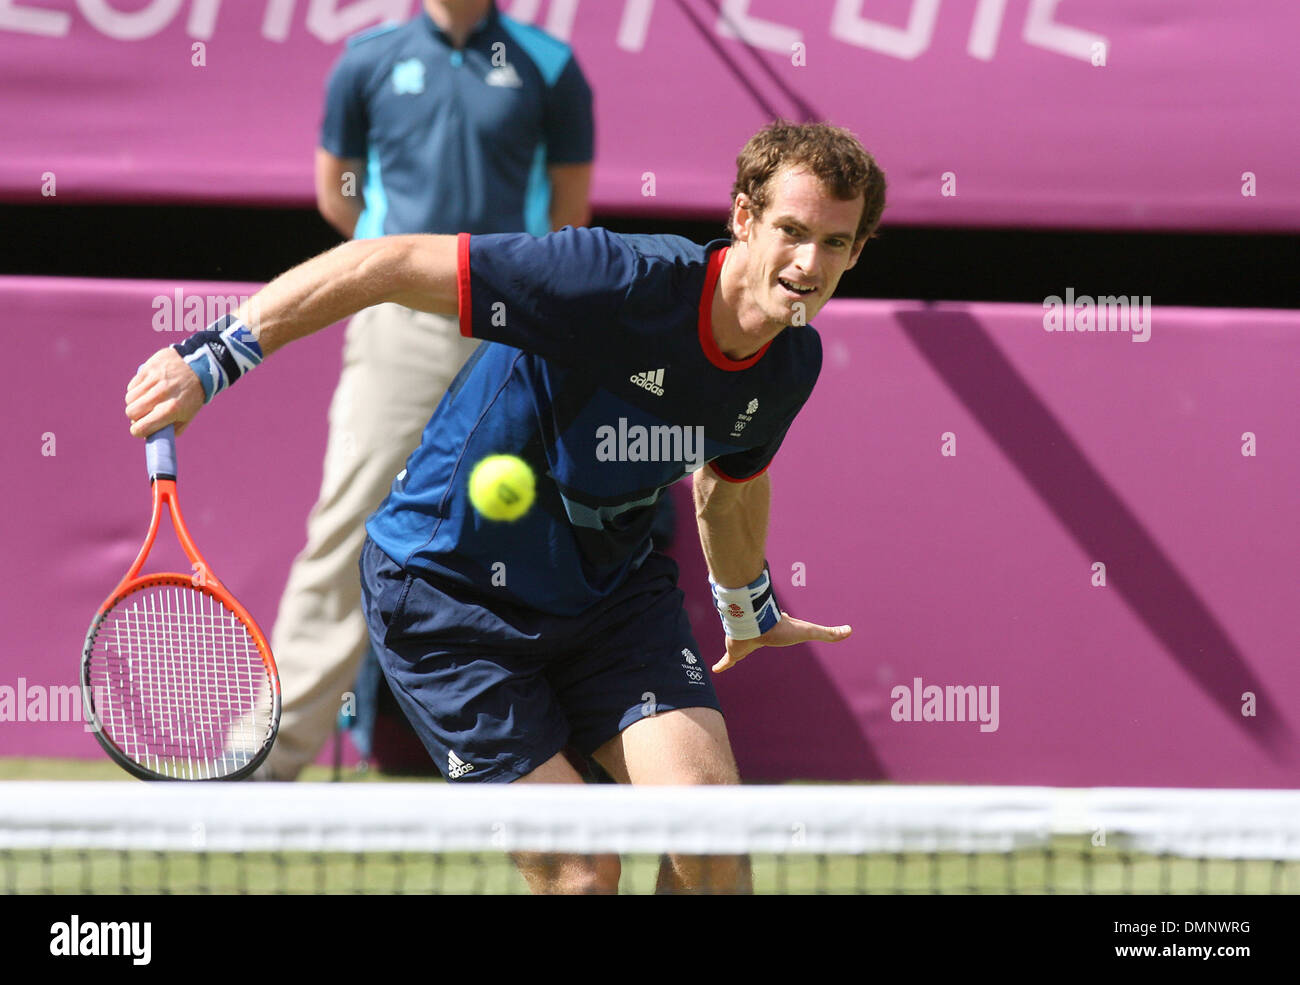 Andy Murray Olympische Spiele London 2012 - Herren Tennis Einzel Finale -  Andy Murray (GBR) V Roger Federer (SWI) in Wimbledon Stockfotografie - Alamy